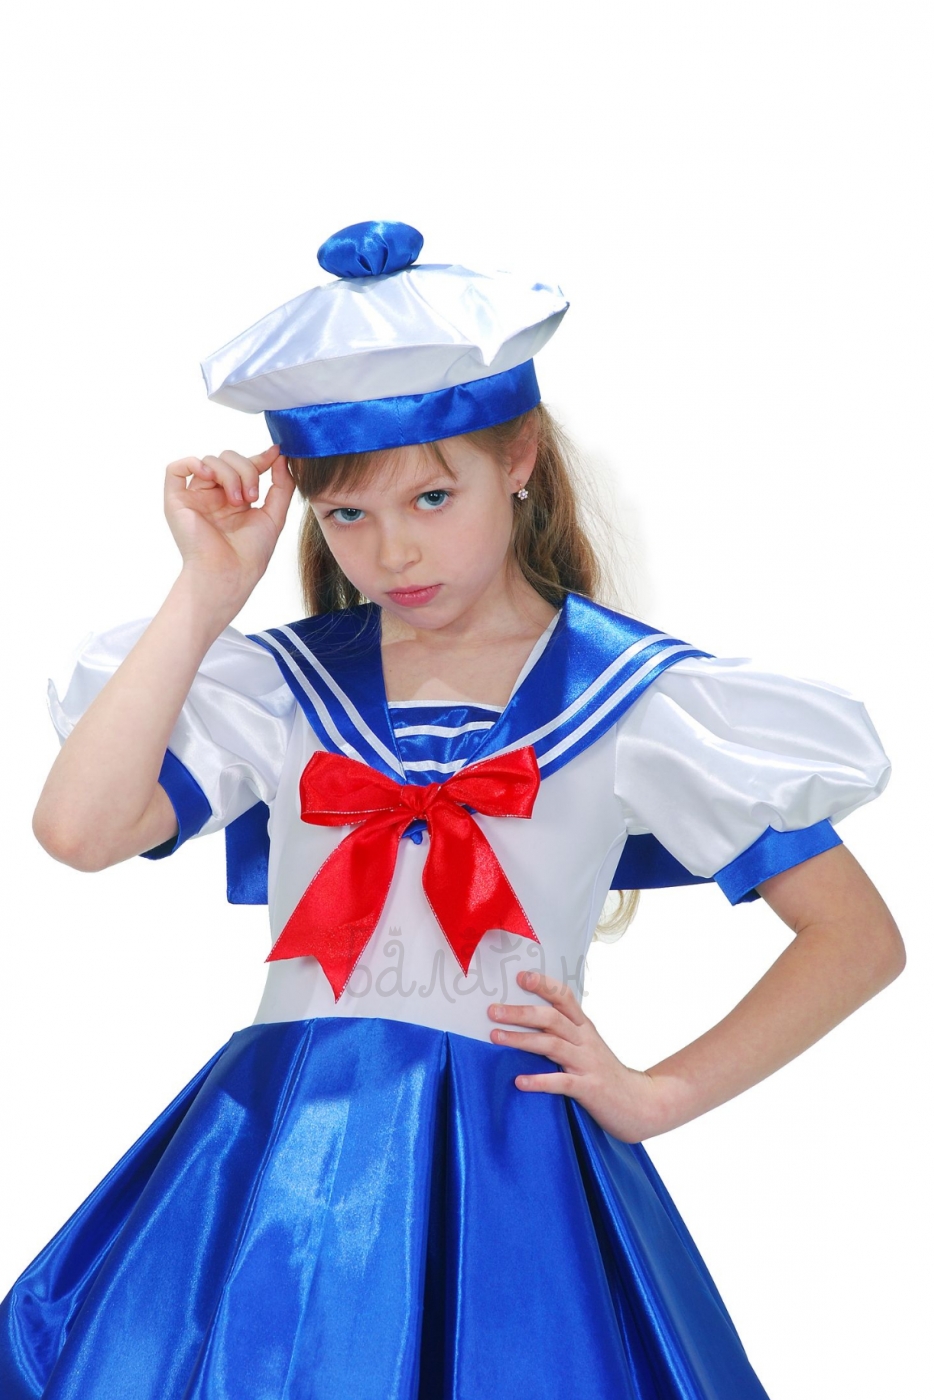 Sea Princess costume for little girl   